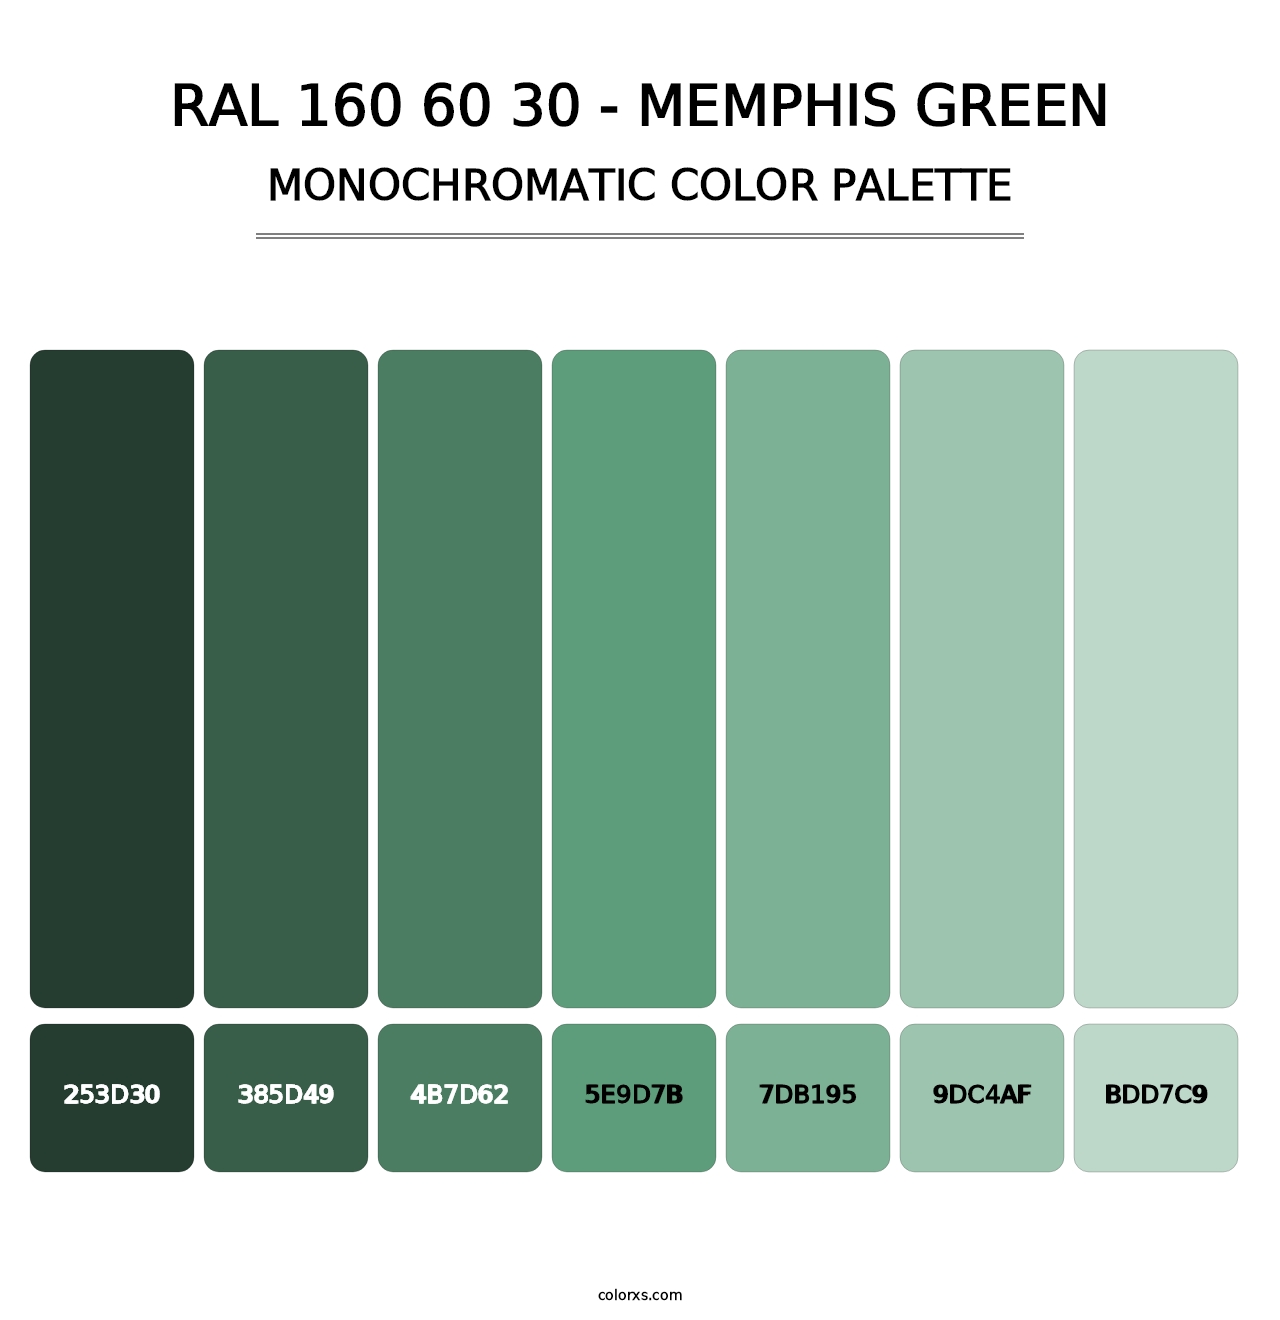 RAL 160 60 30 - Memphis Green - Monochromatic Color Palette